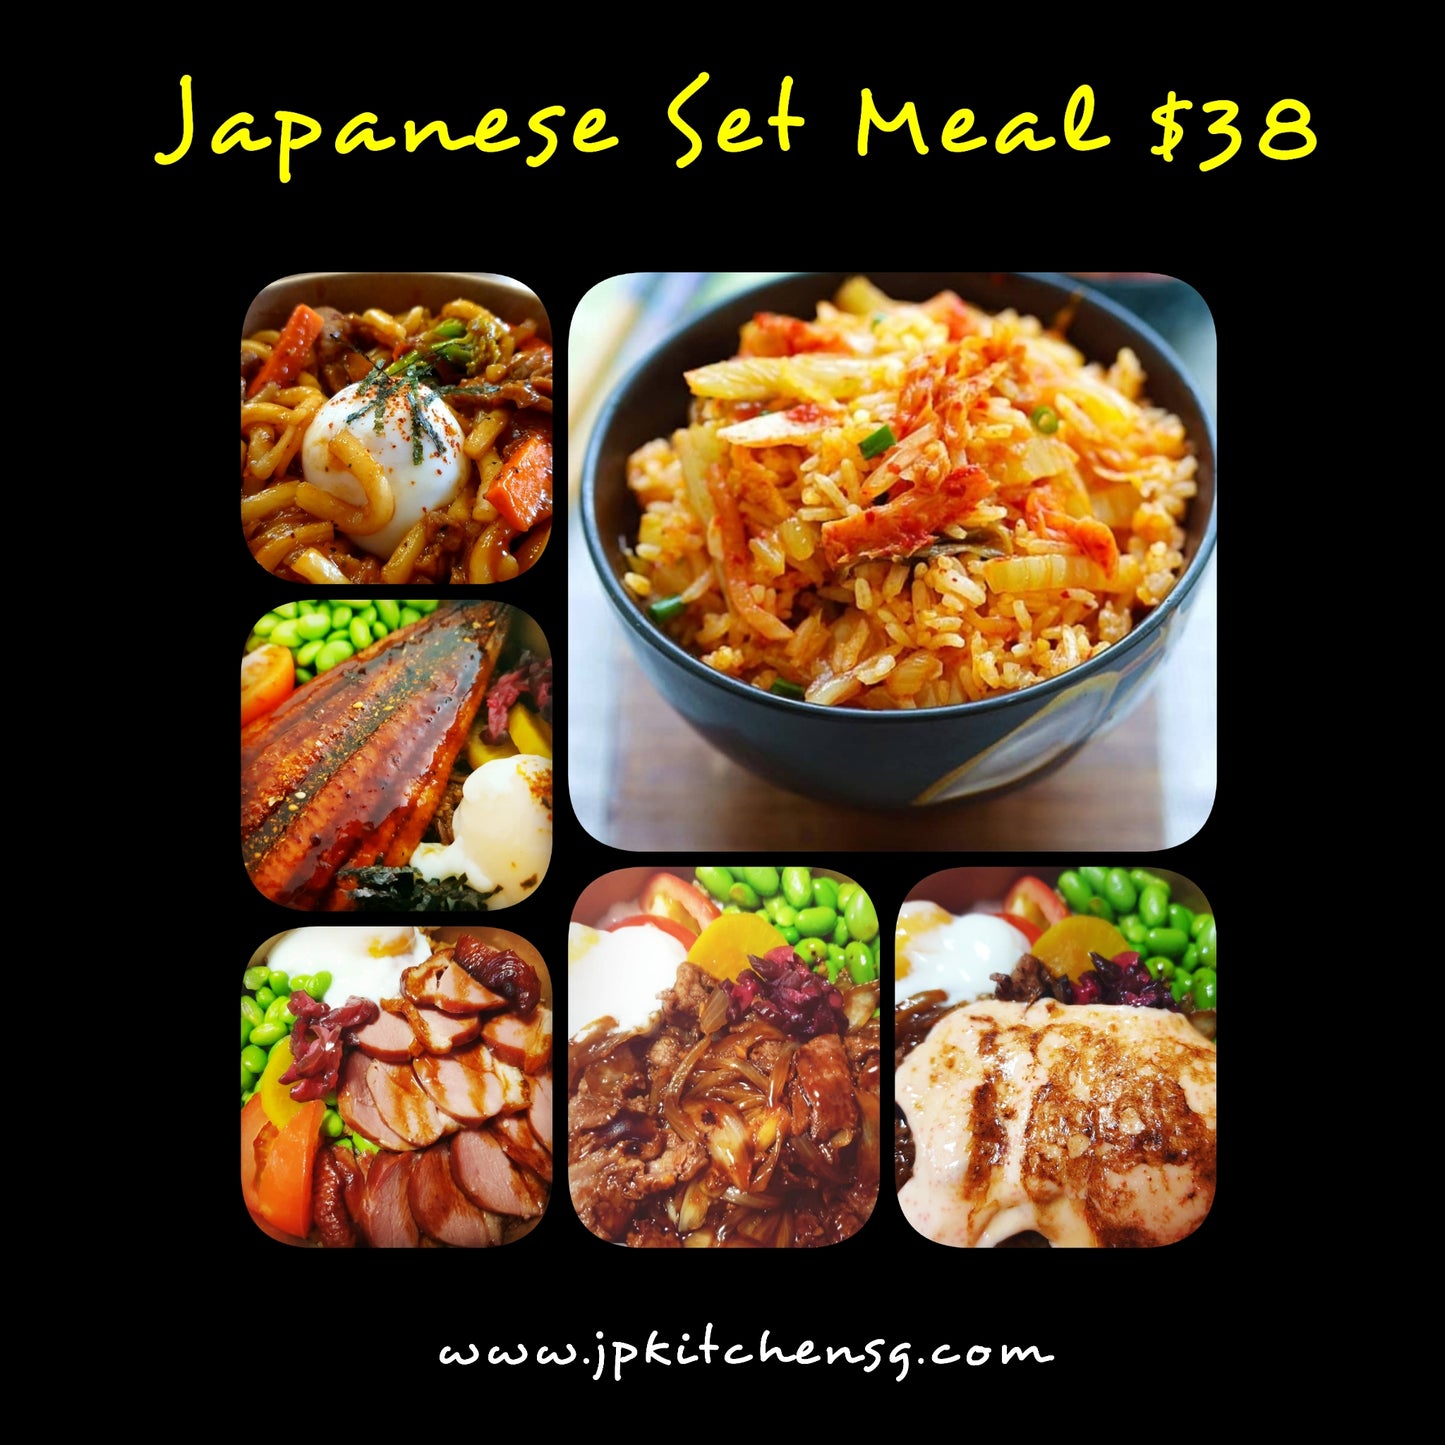 JAPANESE SET MEAL $38